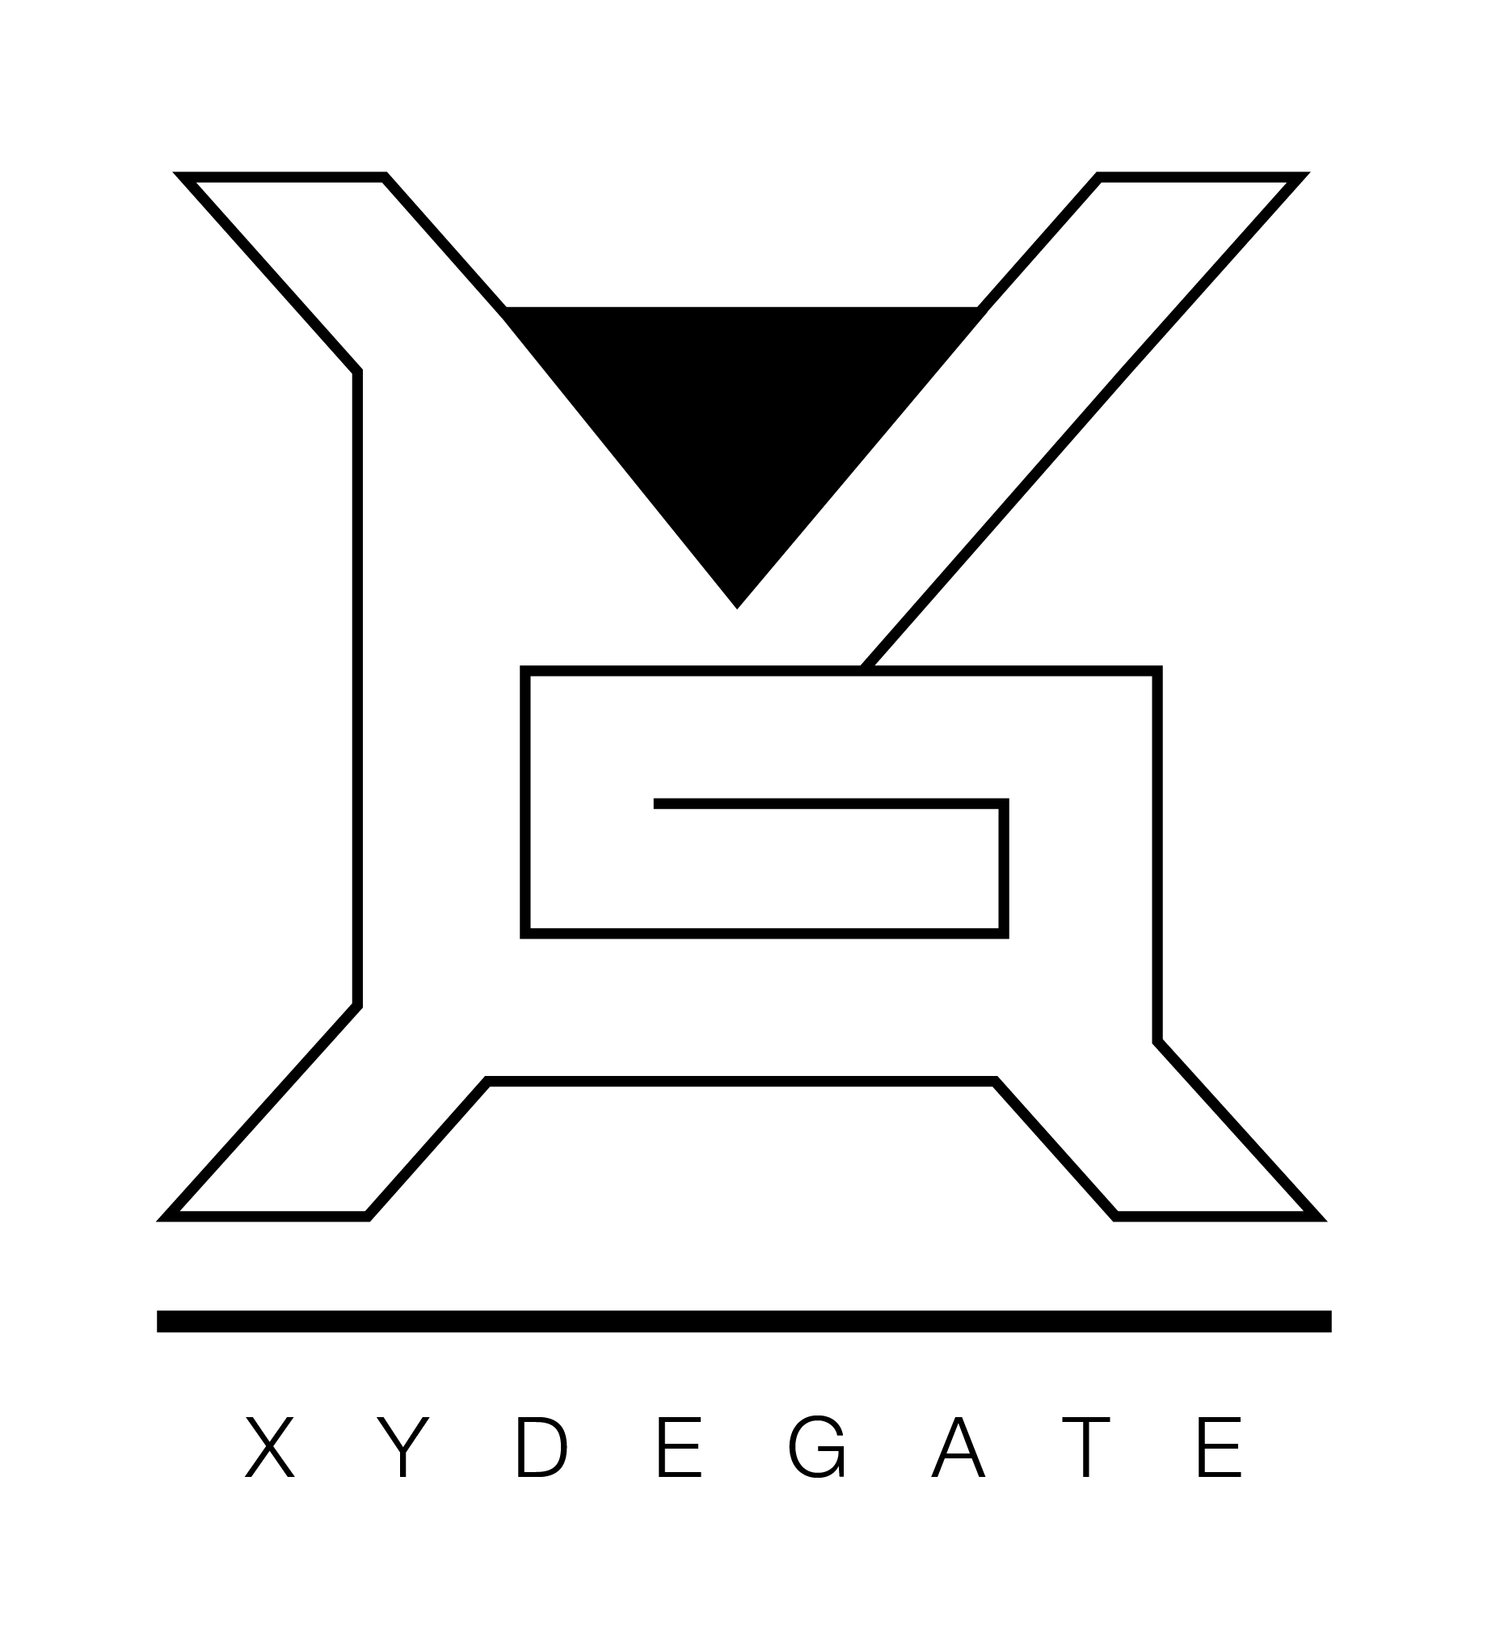 XYDEGATE